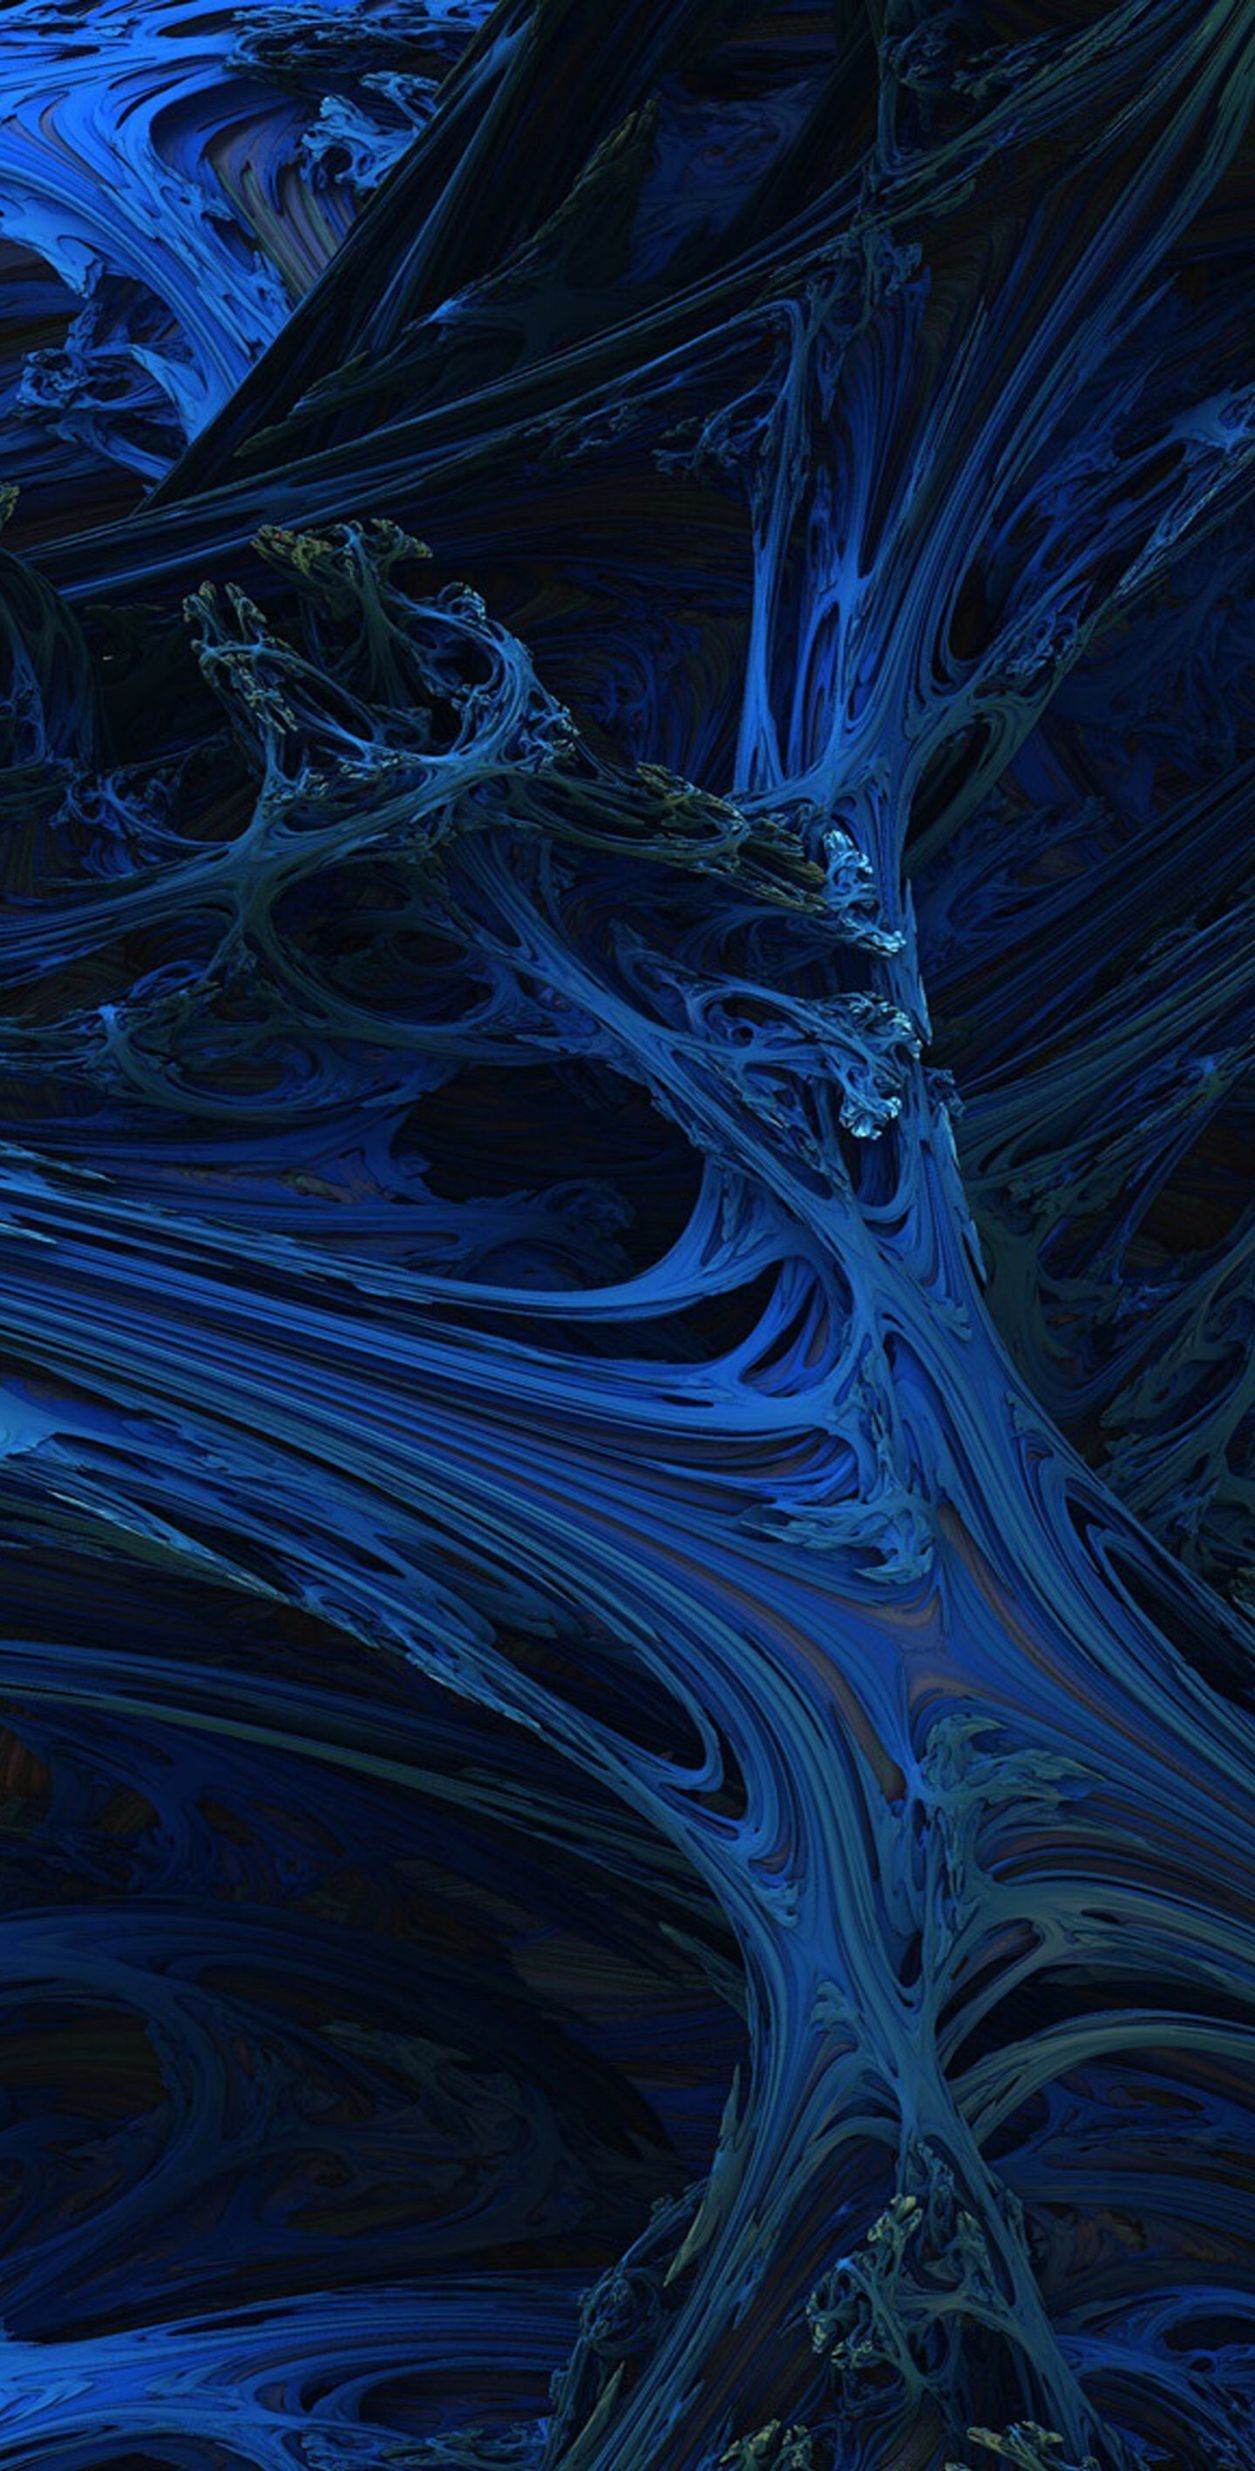 dunkelblaue mustertapete,blau,wasser,elektrisches blau,cg kunstwerk,fraktale kunst